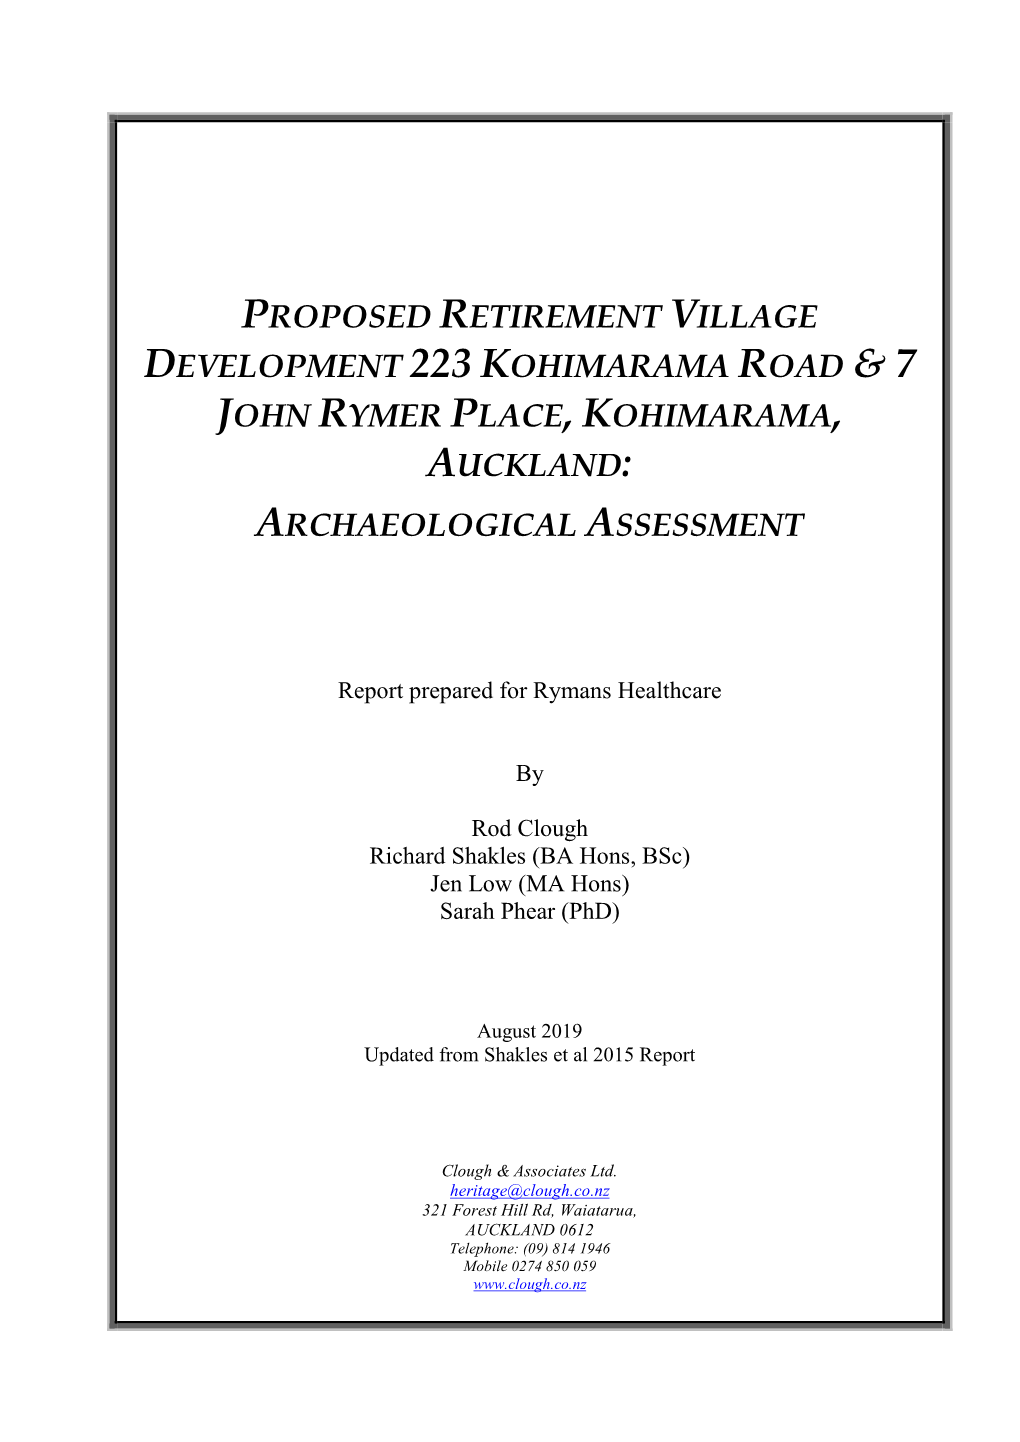 Proposed Retirement Village Development 223 Kohimarama Road & 7 John Rymer Place, Kohimarama, Auckland: Archaeological Assessment